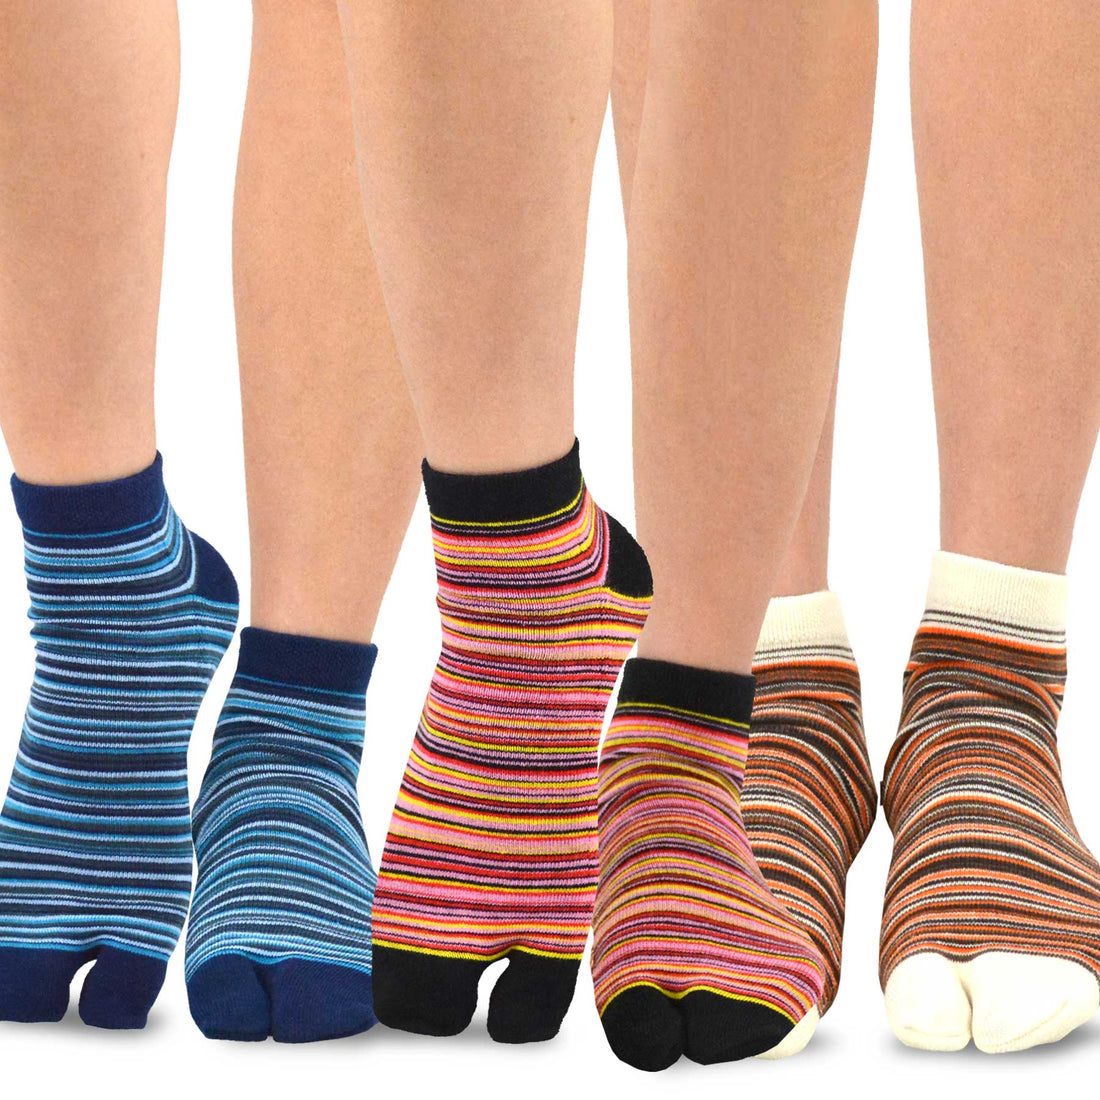 Are Tabi Socks Good for Your Feet?